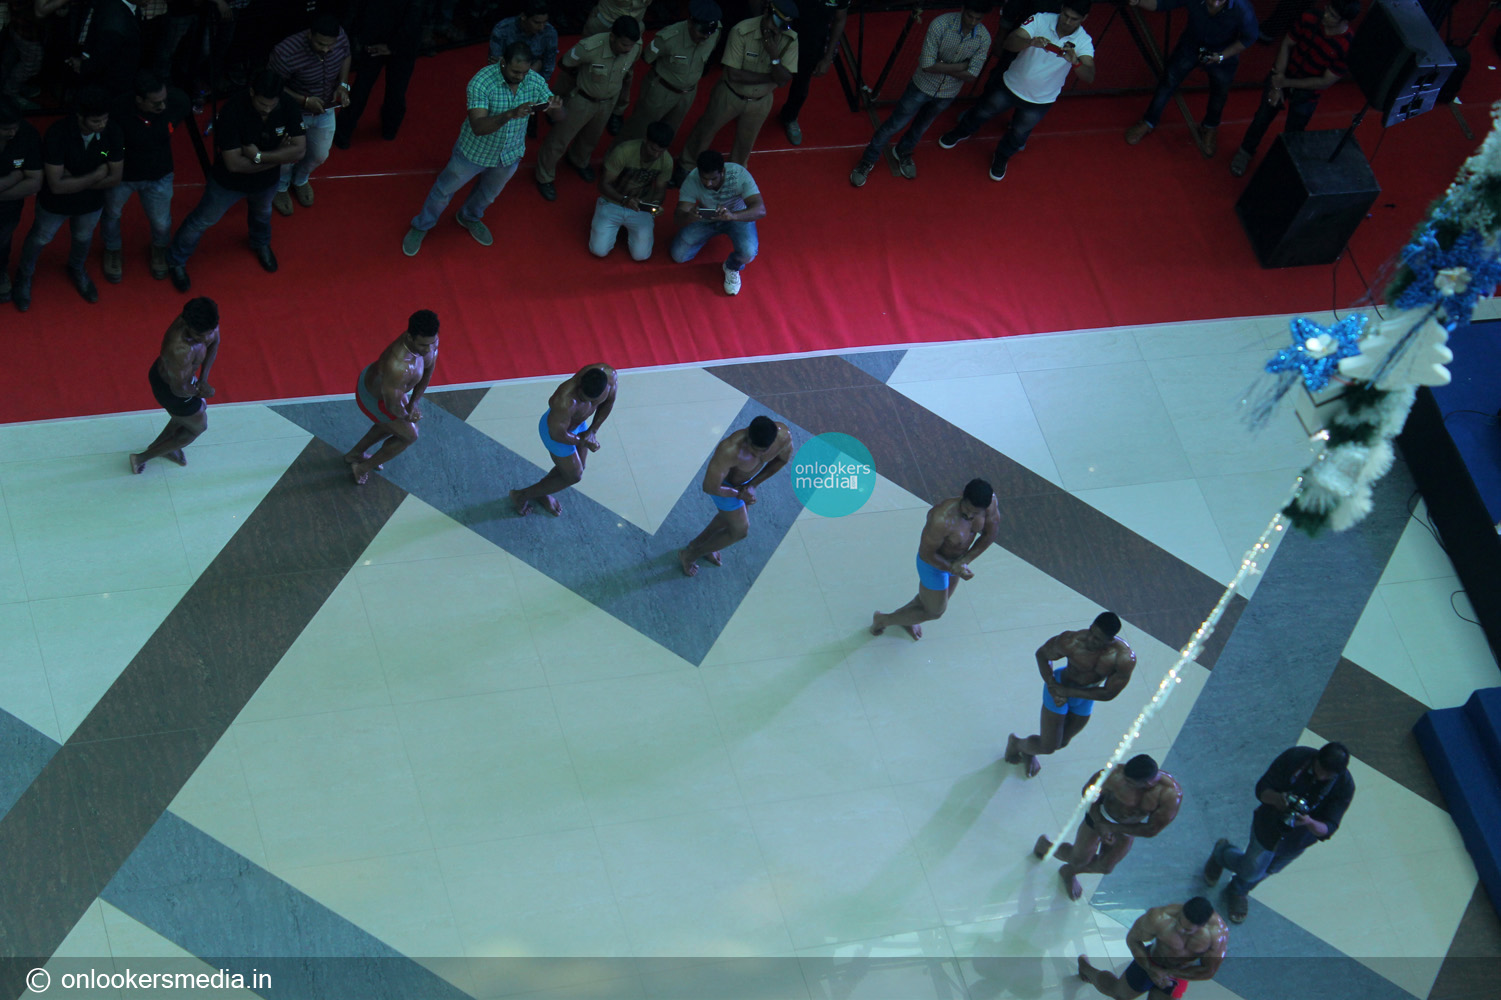 https://onlookersmedia.in/wp-content/uploads/2015/01/I-promotional-function-at-Lulu-mall-Kerala-Vikram-Amy-Jackson-Onlookers-Media-14.jpg